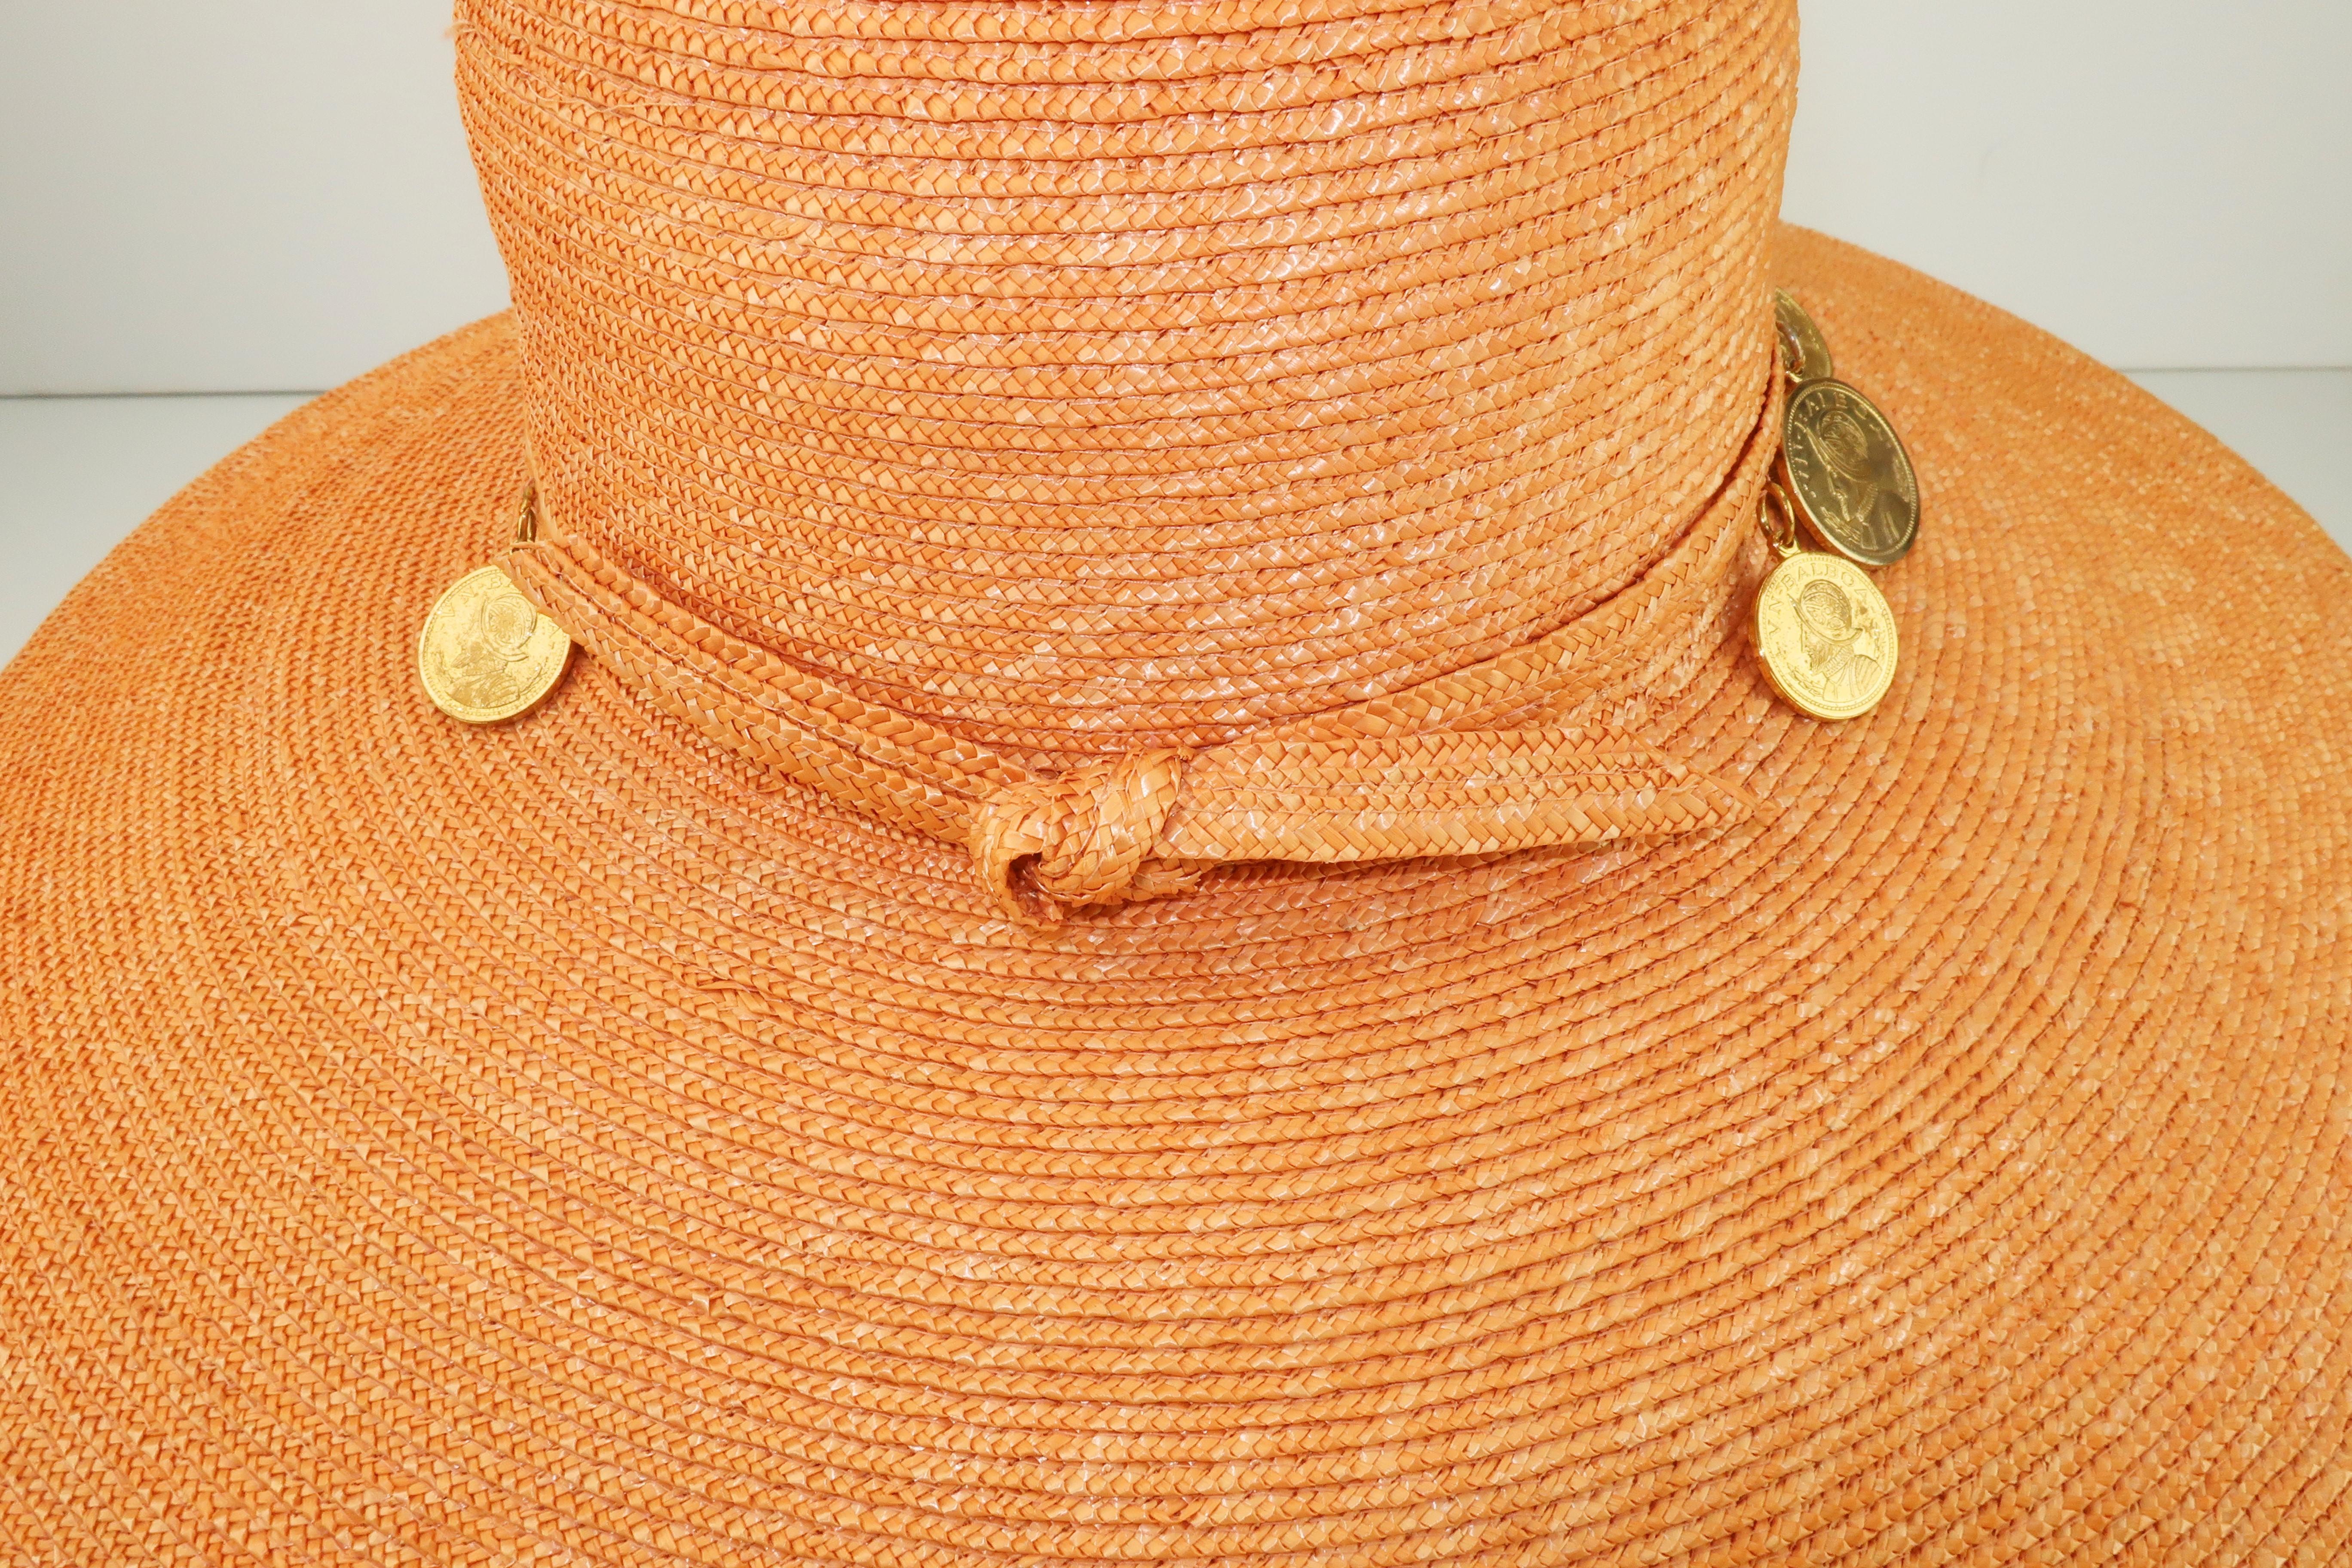 Vintage Wide Brim Straw Hat With Gold Coins 4